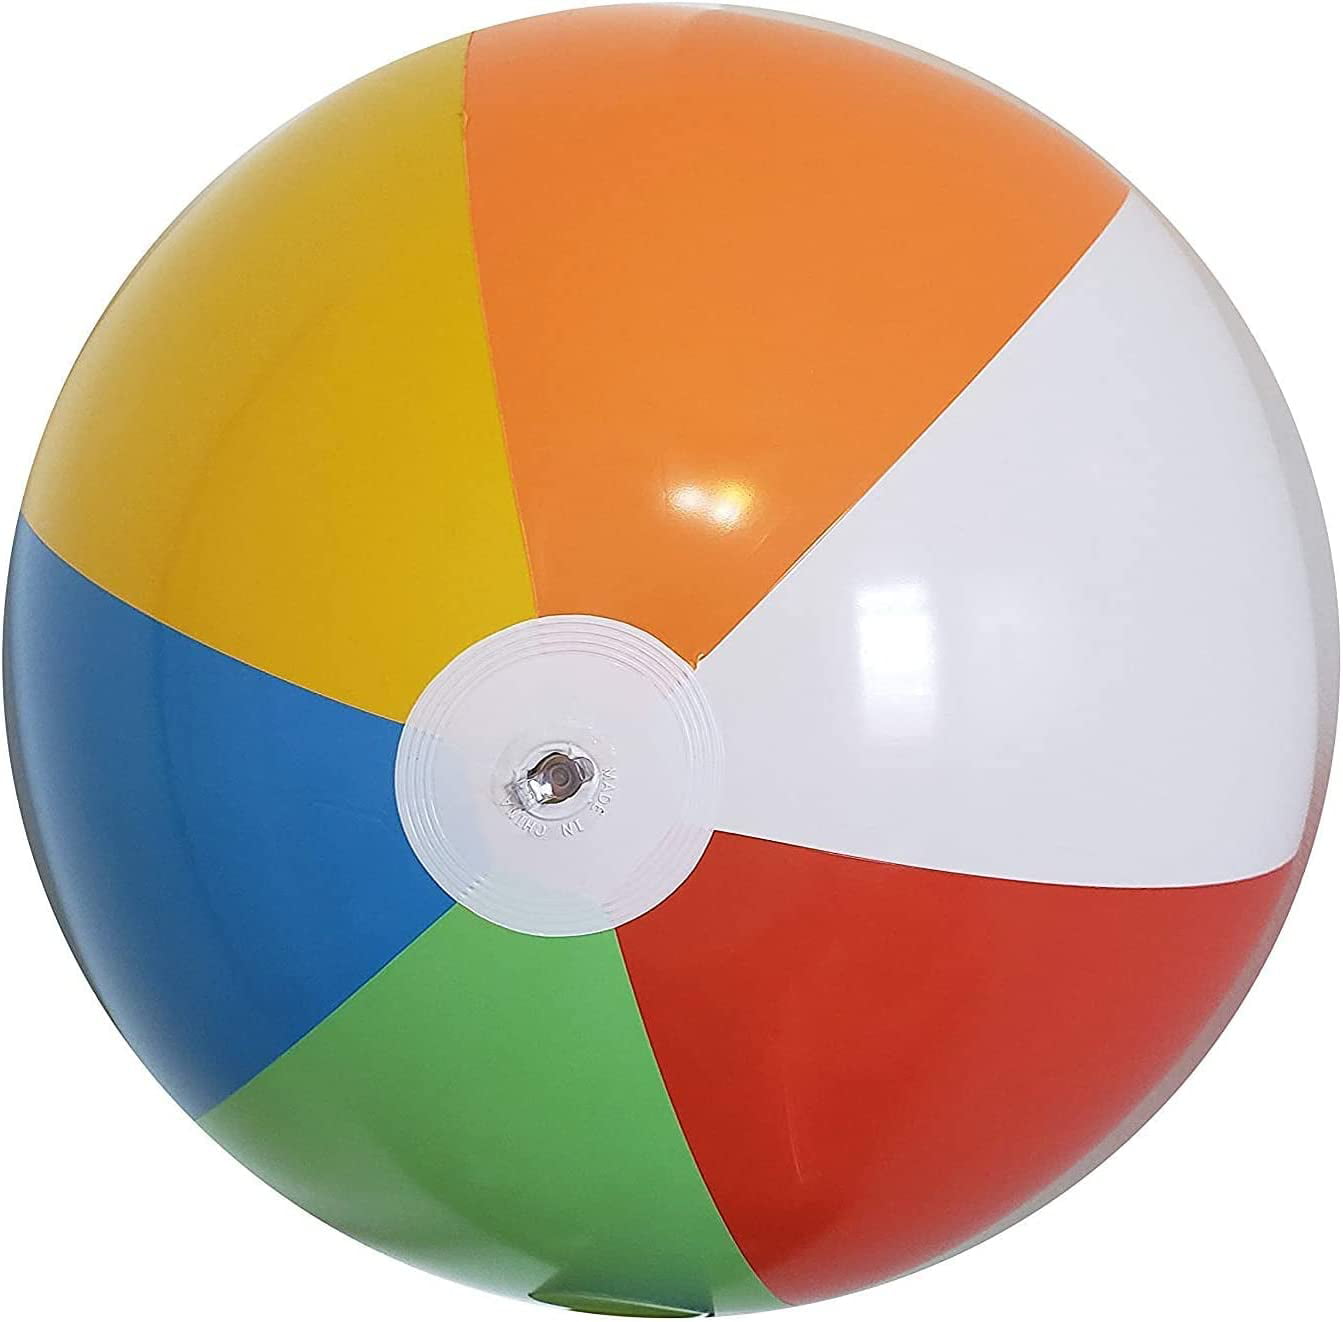 12" POPULAR Set of 6 EMOJI Inflatable Beach Balls Pool Ball Inflate 